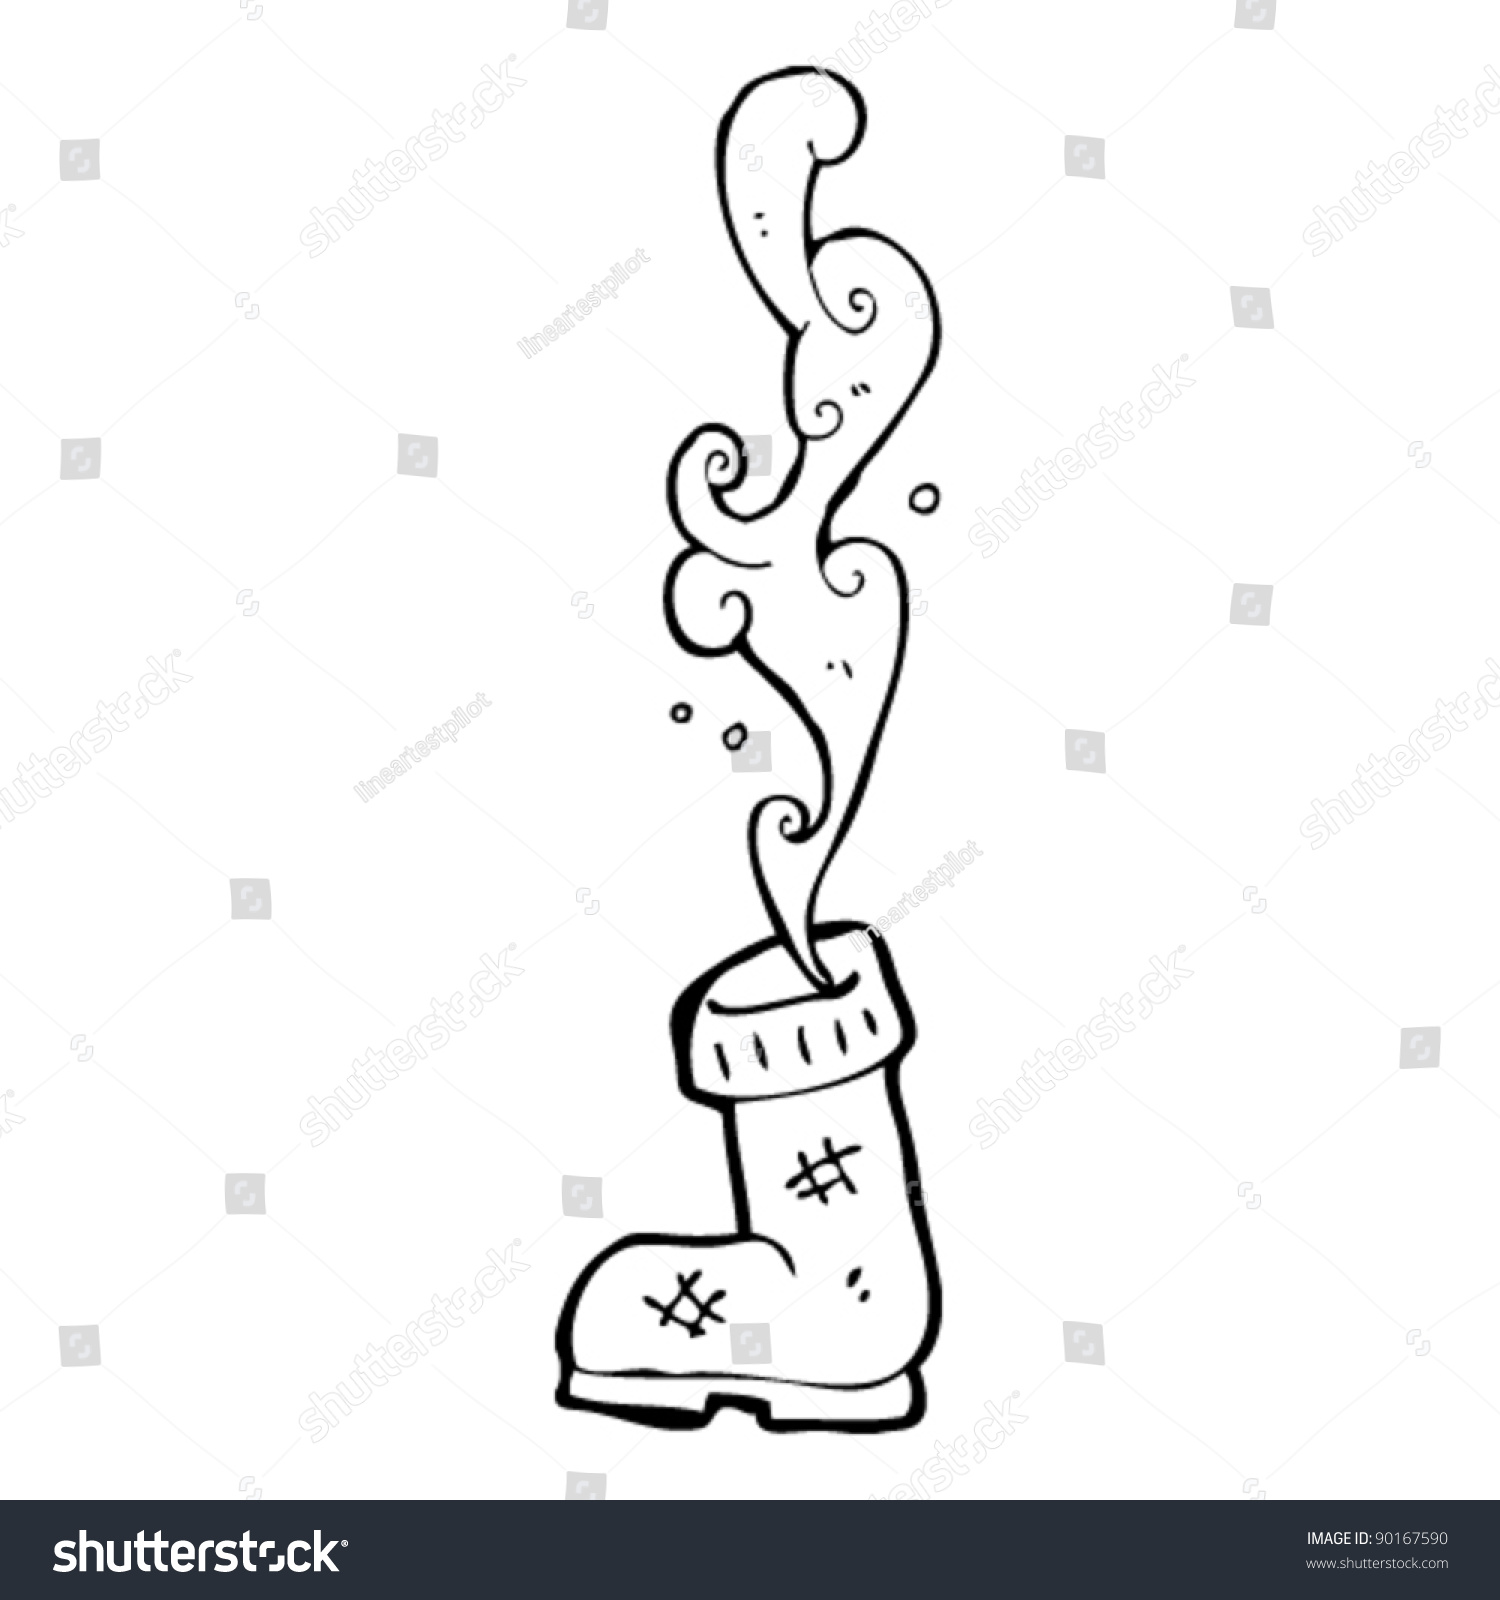 Smelly Old Boot Cartoon Stock Vector Illustration 90167590 : Shutterstock